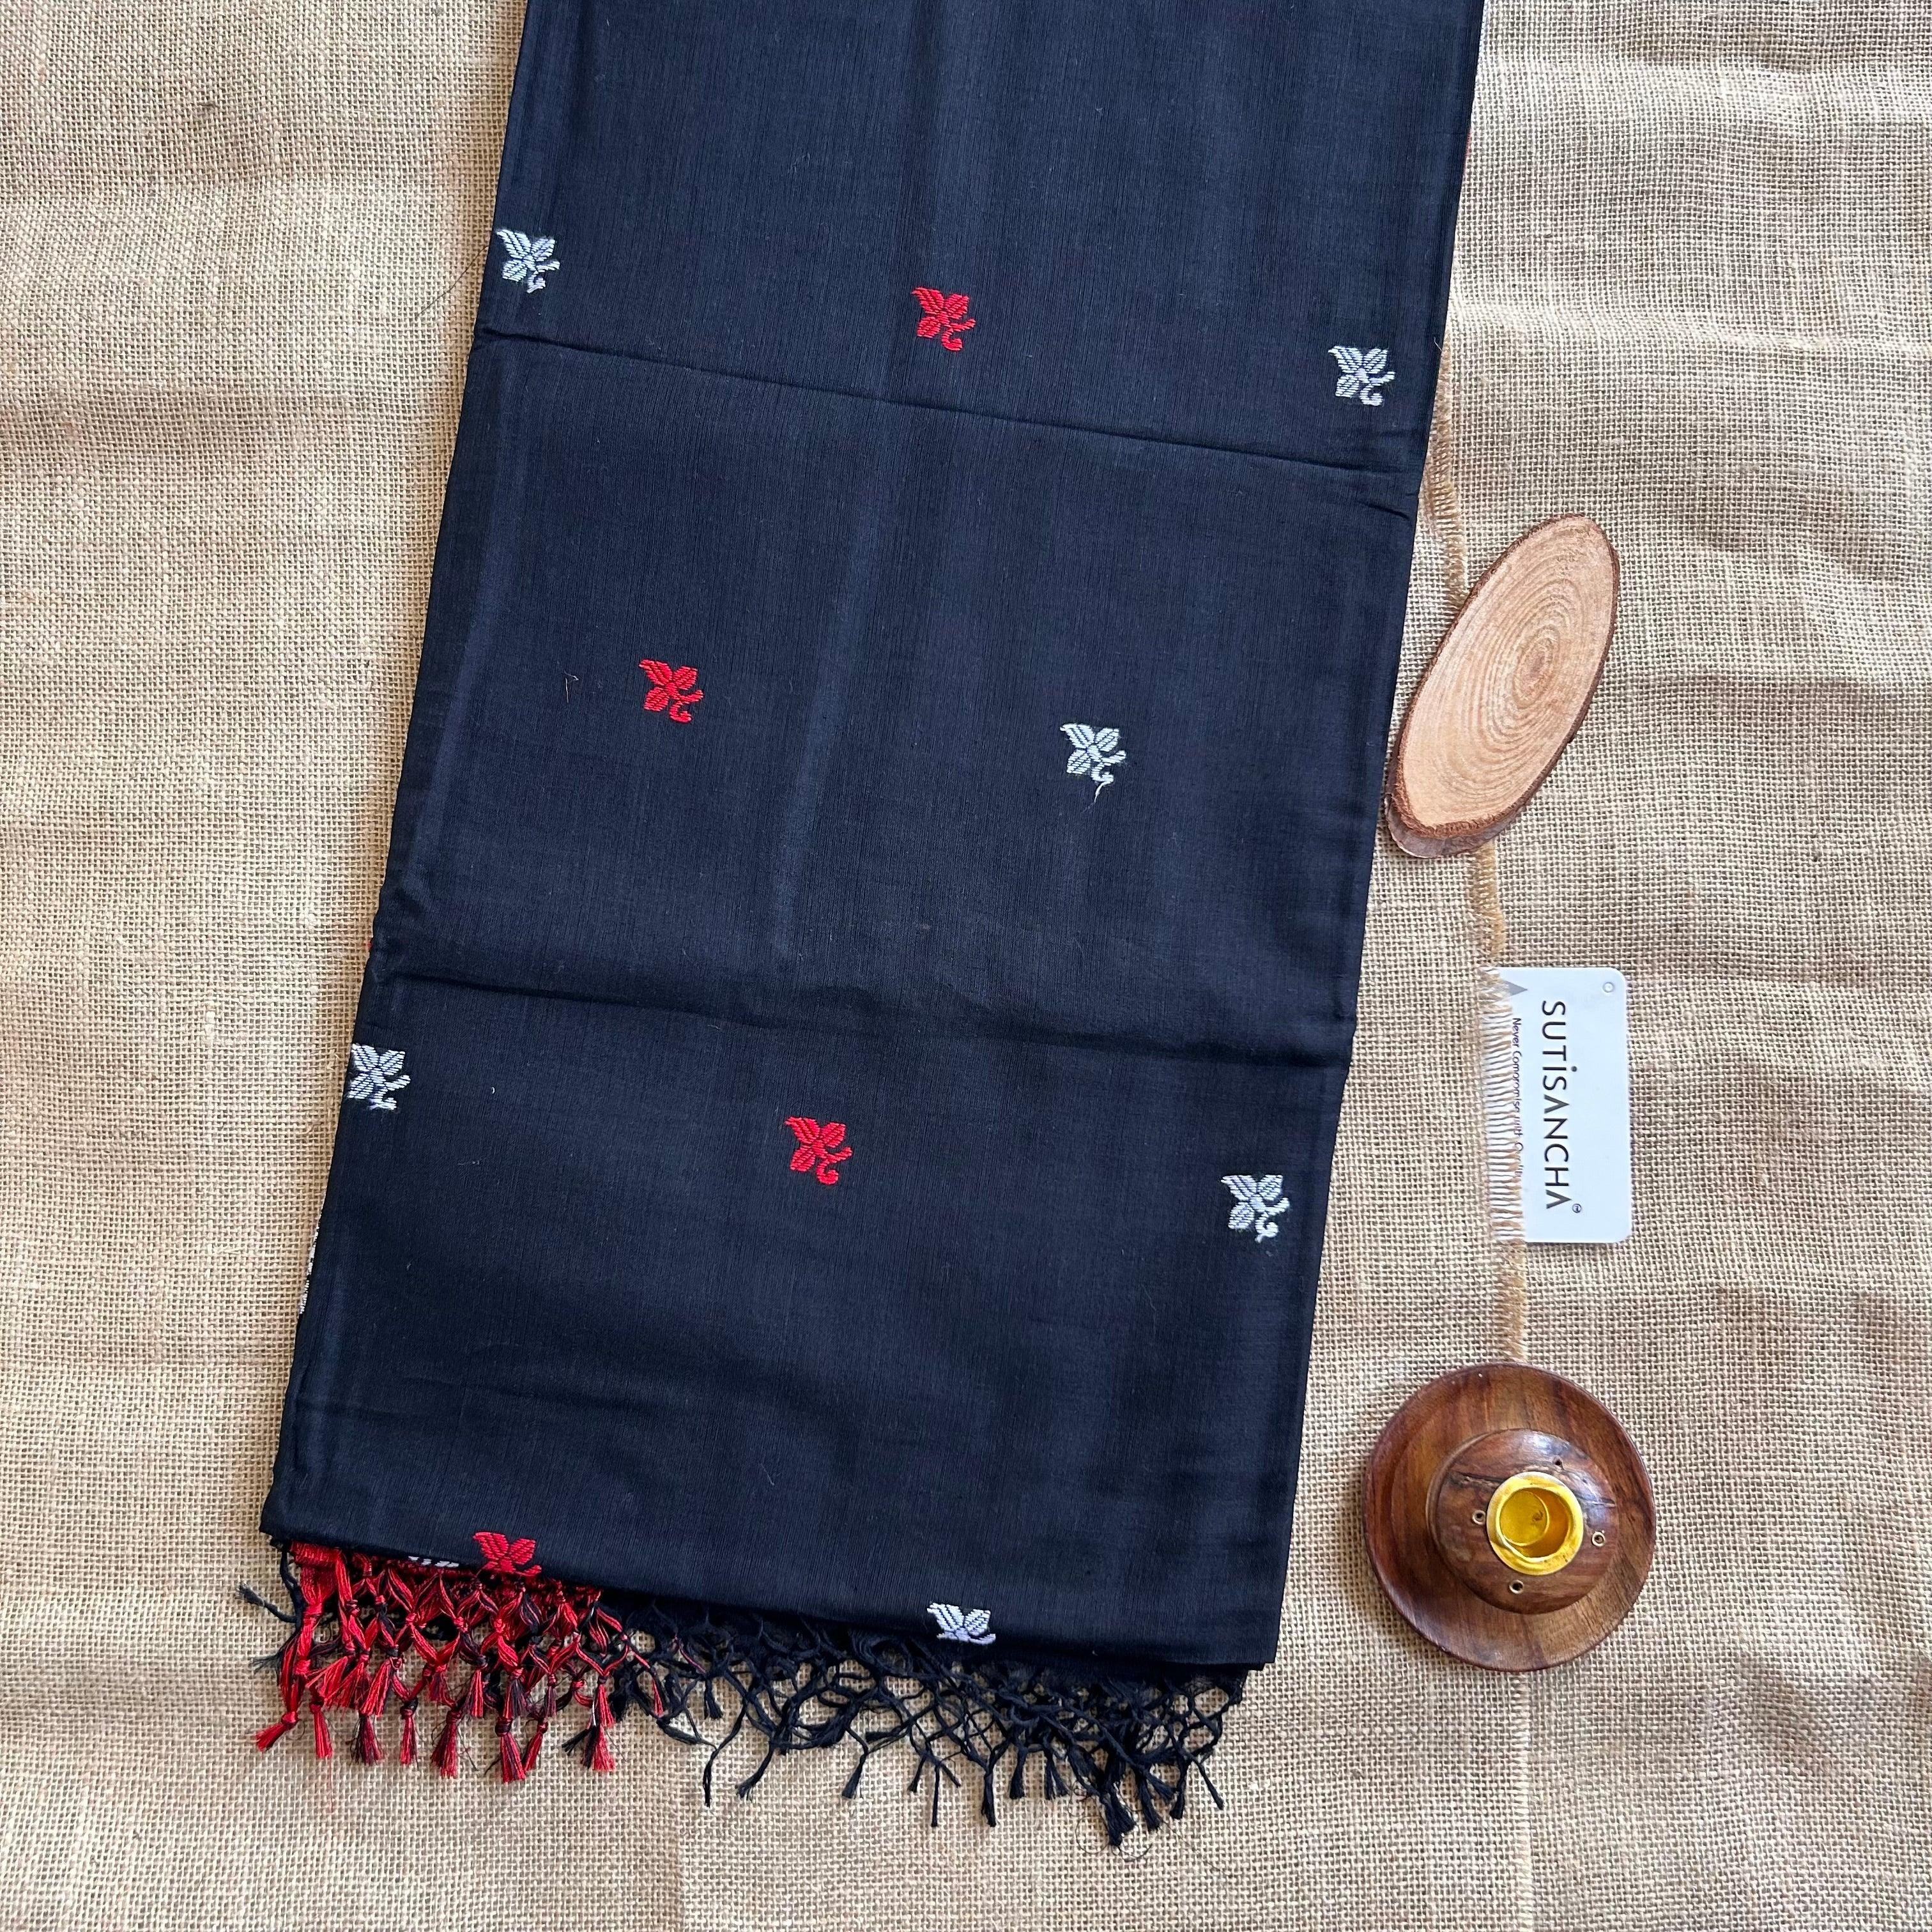 Sutisancha Handloom Cotton Black jamdani saree - Suti Sancha